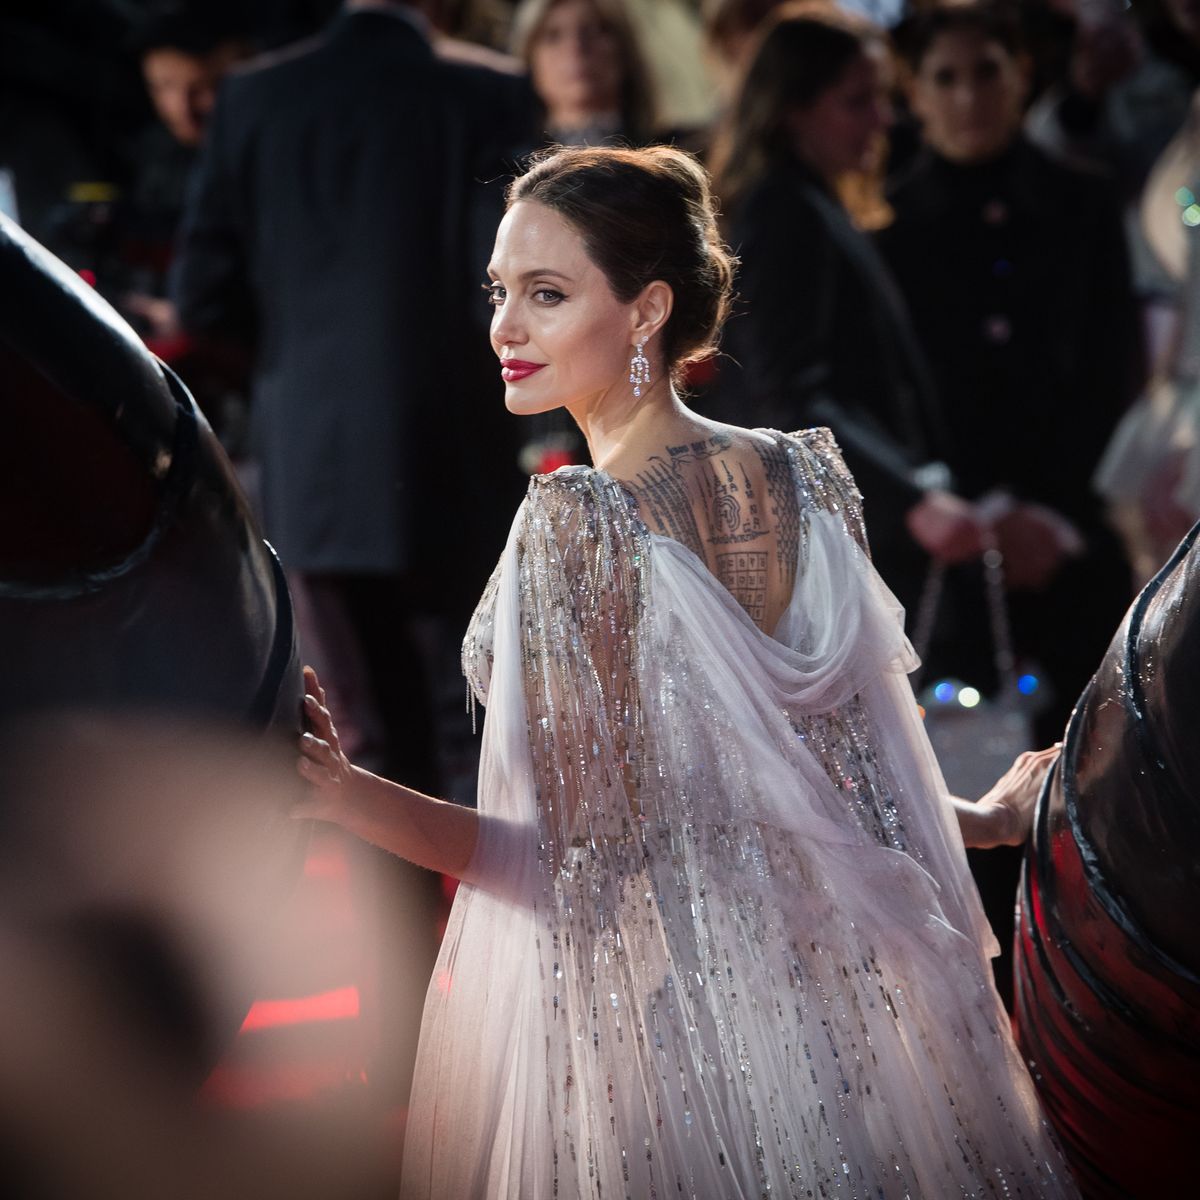 Why Angelina Jolie Skipped the 2020 Academy Awards